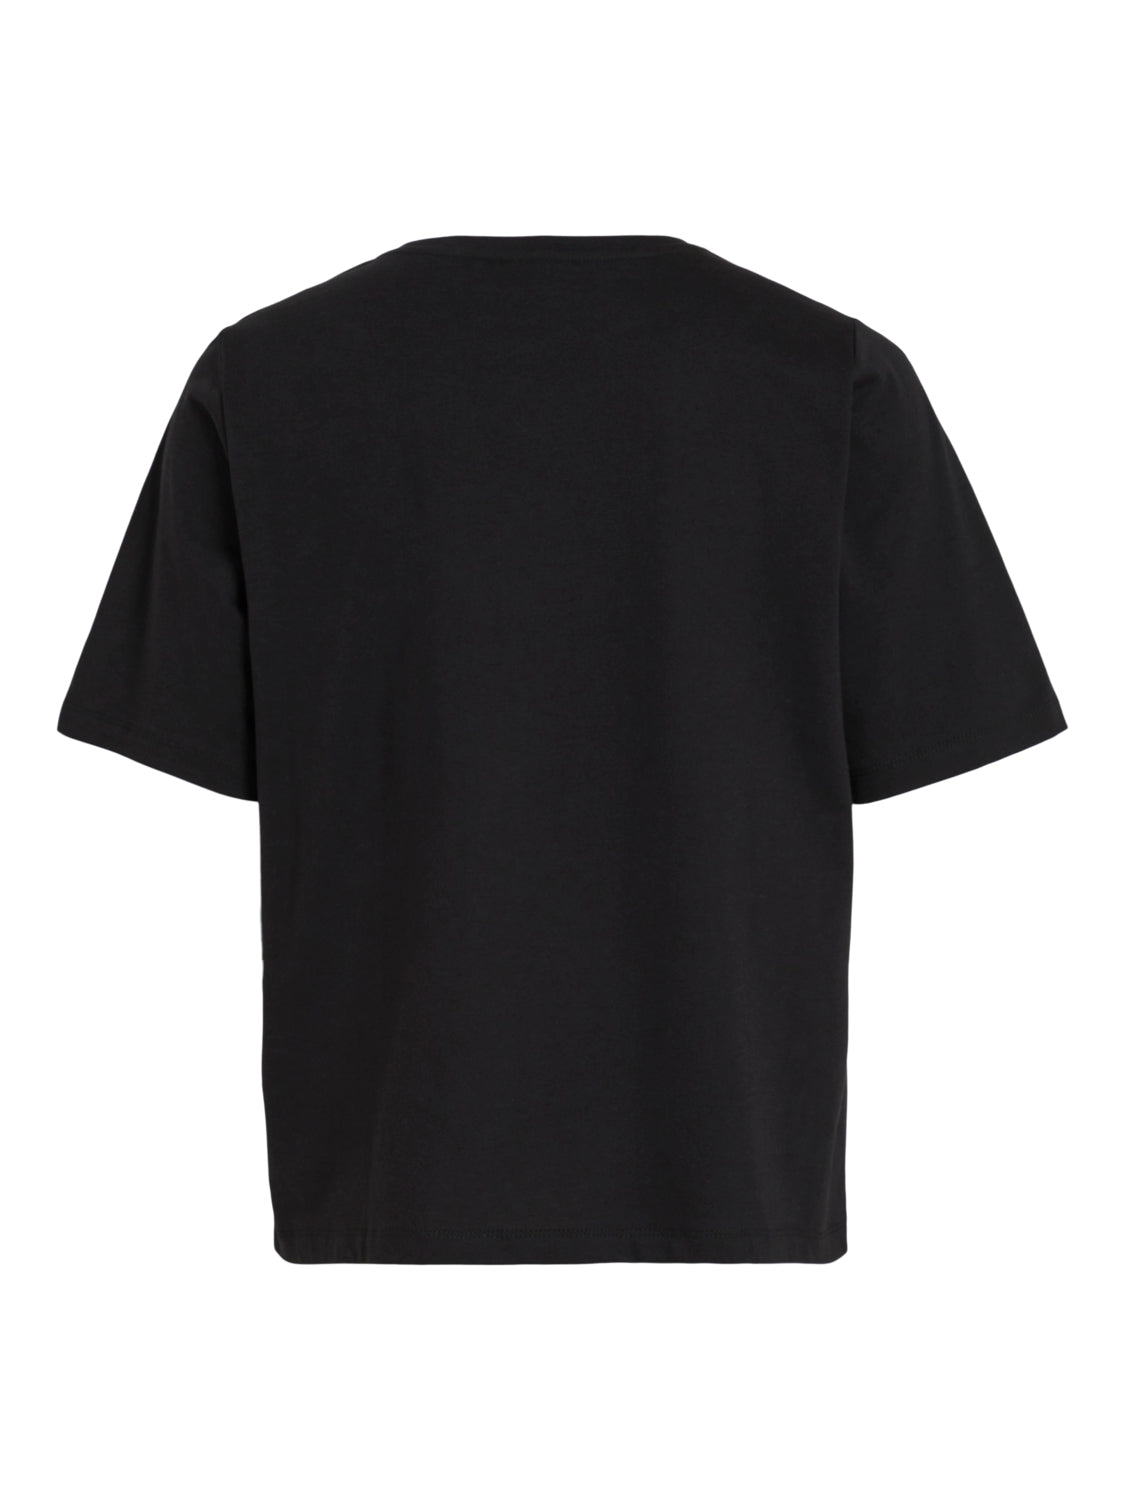 VIDREAMERS T-Shirt - Black